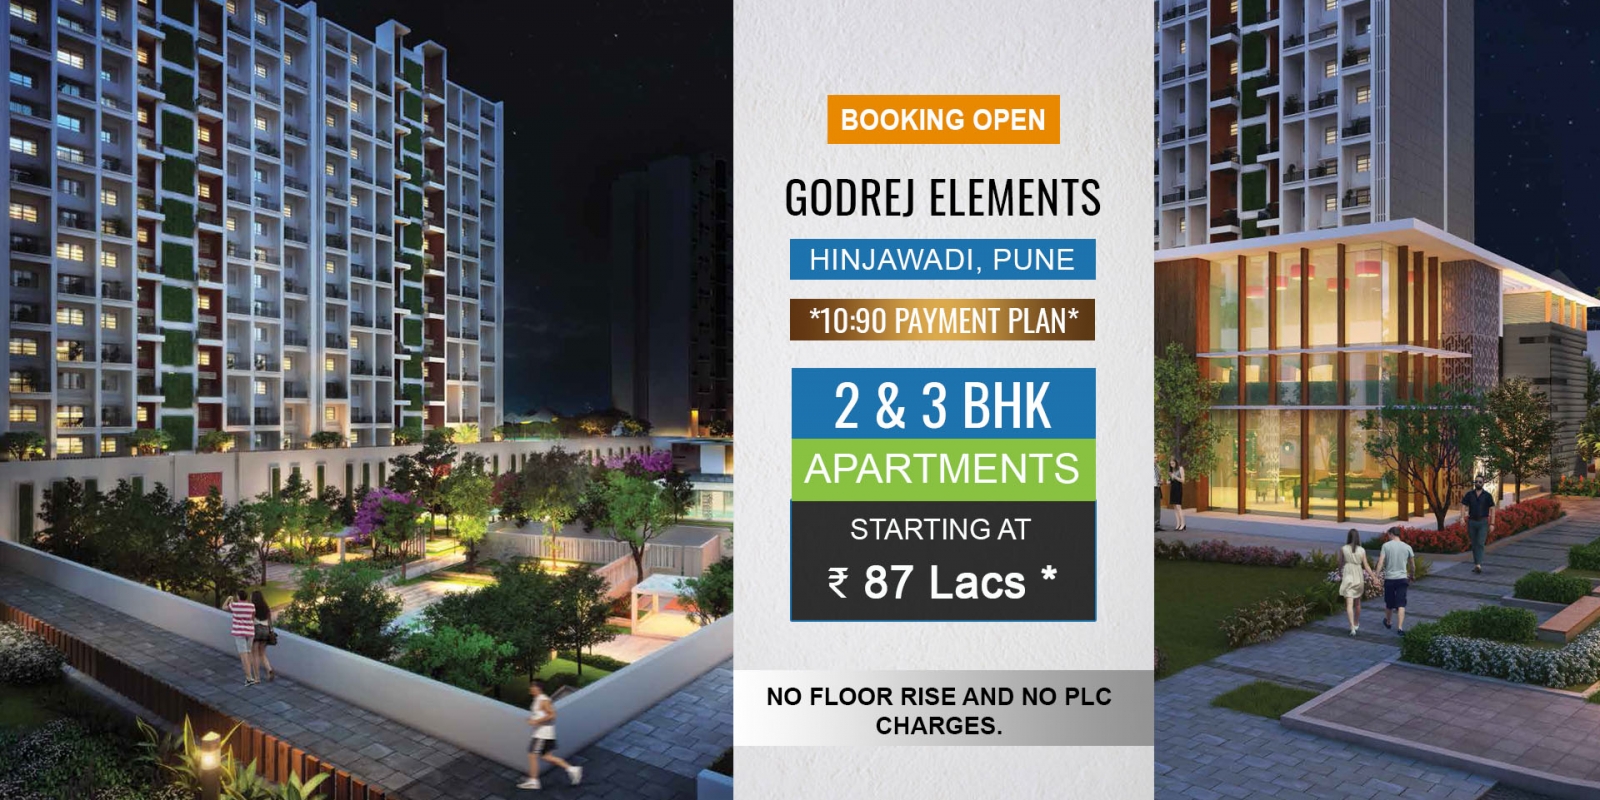 Godrej Elements Hinjawadi Pune-Godrej Elements Banner.jpg